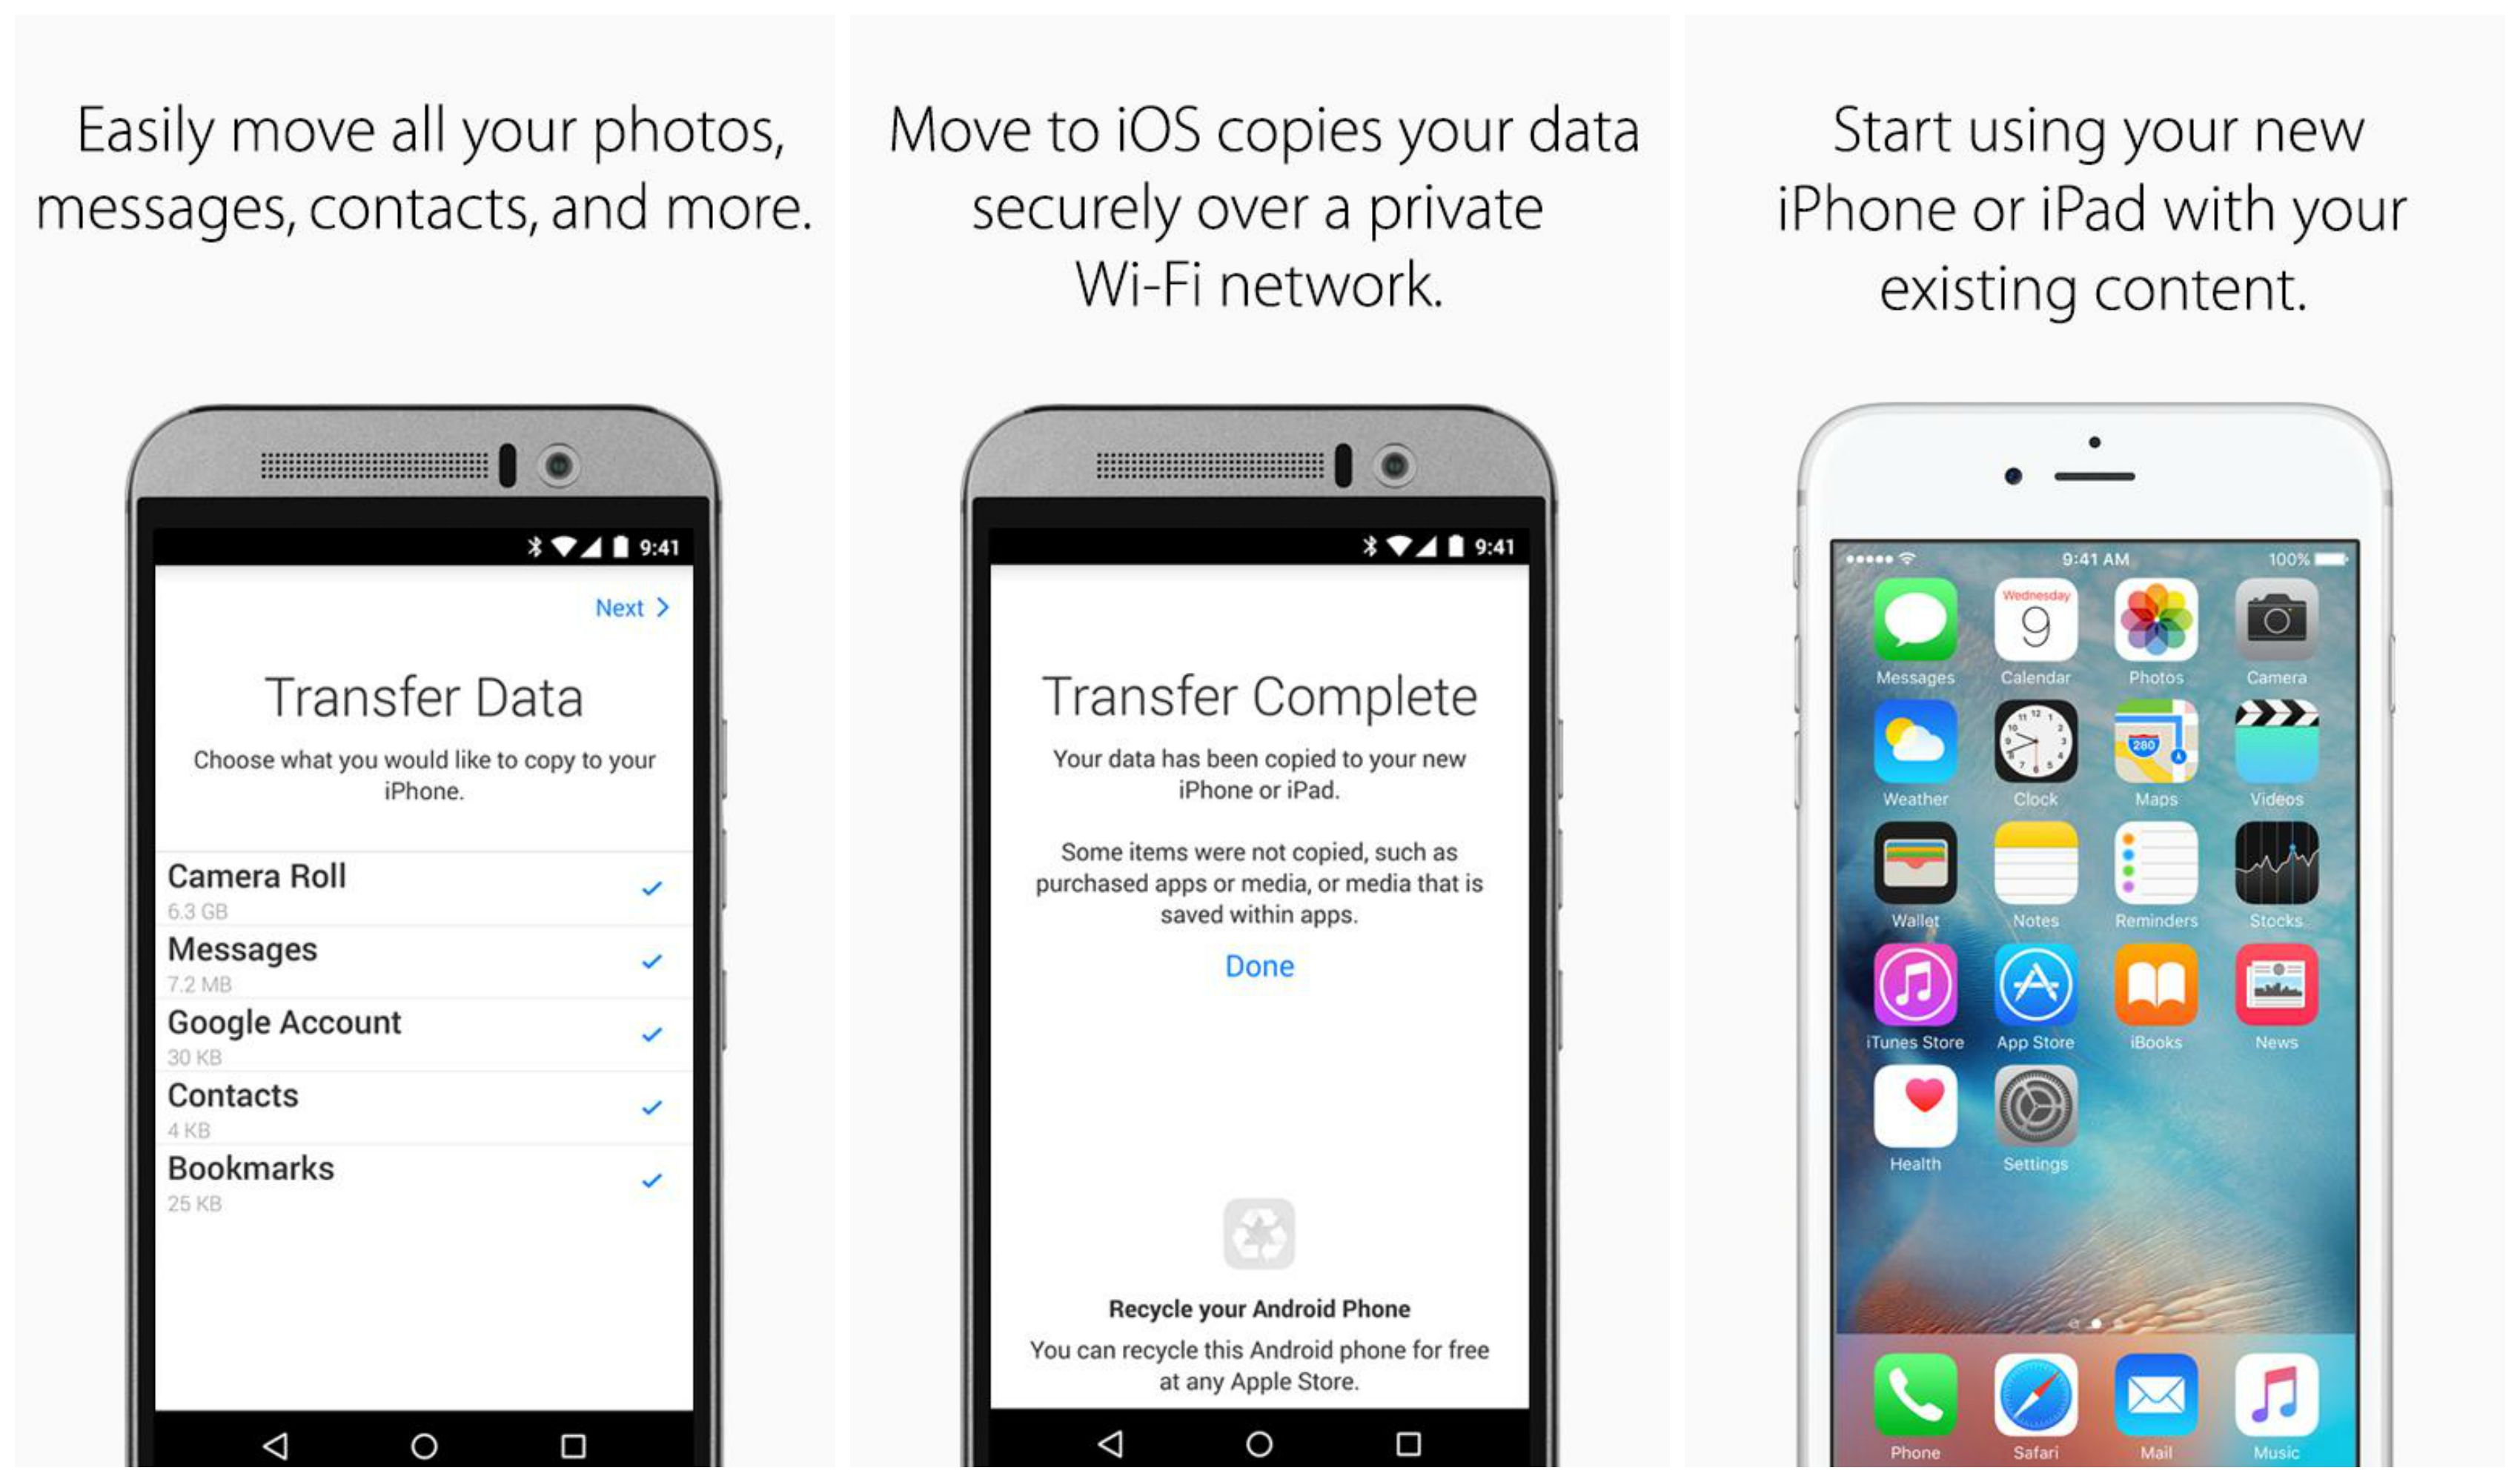 Move to iOS — первое приложение Apple для Android